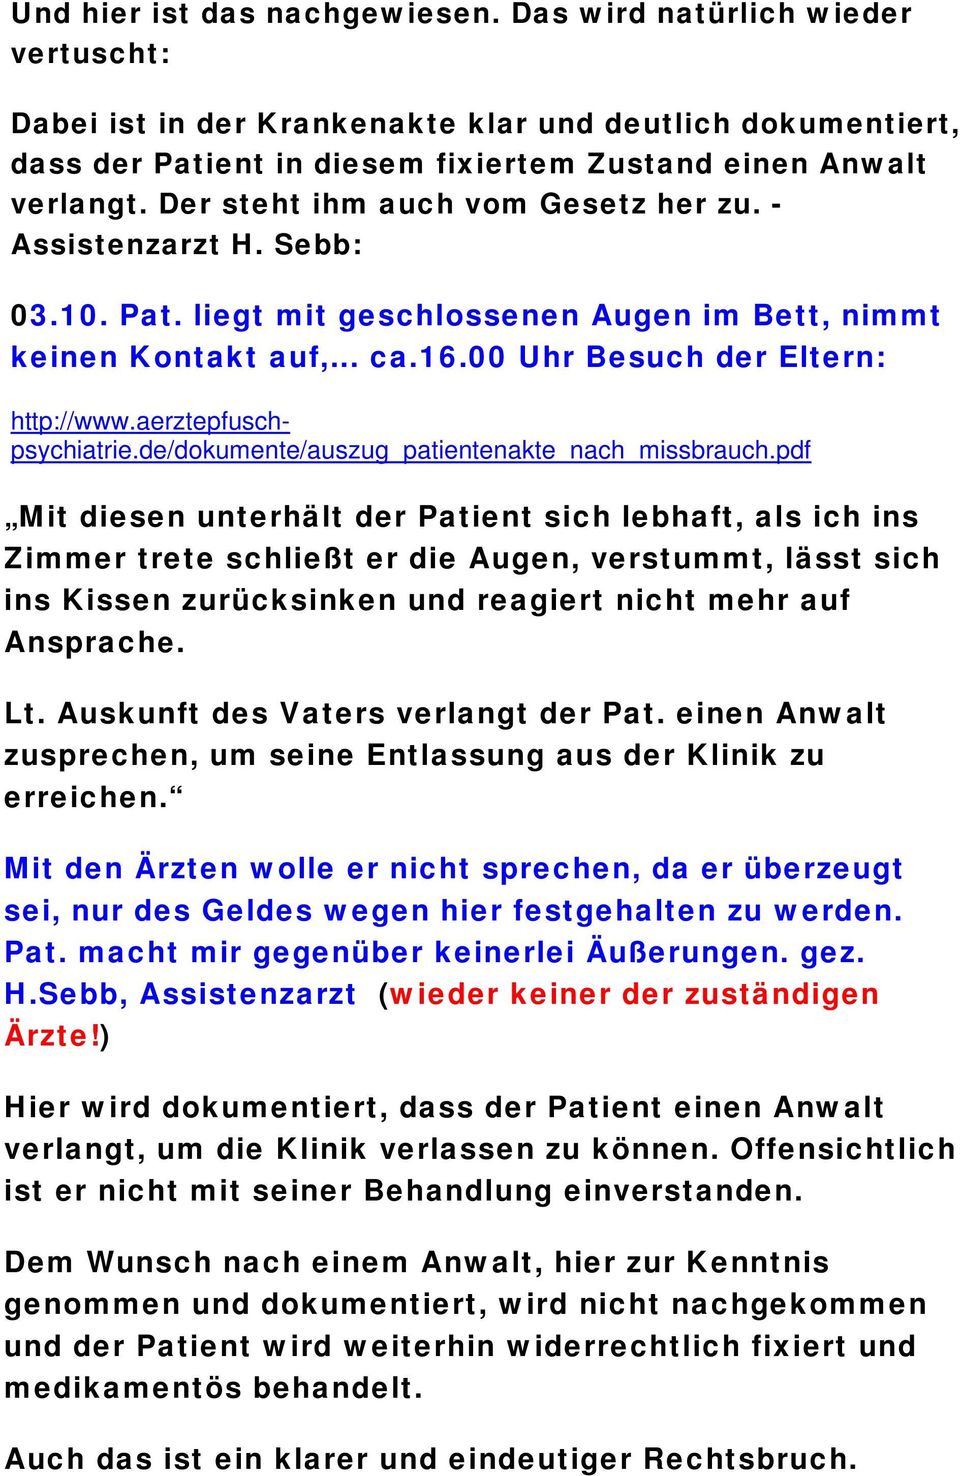 aerztepfuschpsychiatrie.de/dokumente/auszug_patientenakte_nach_missbrauch.